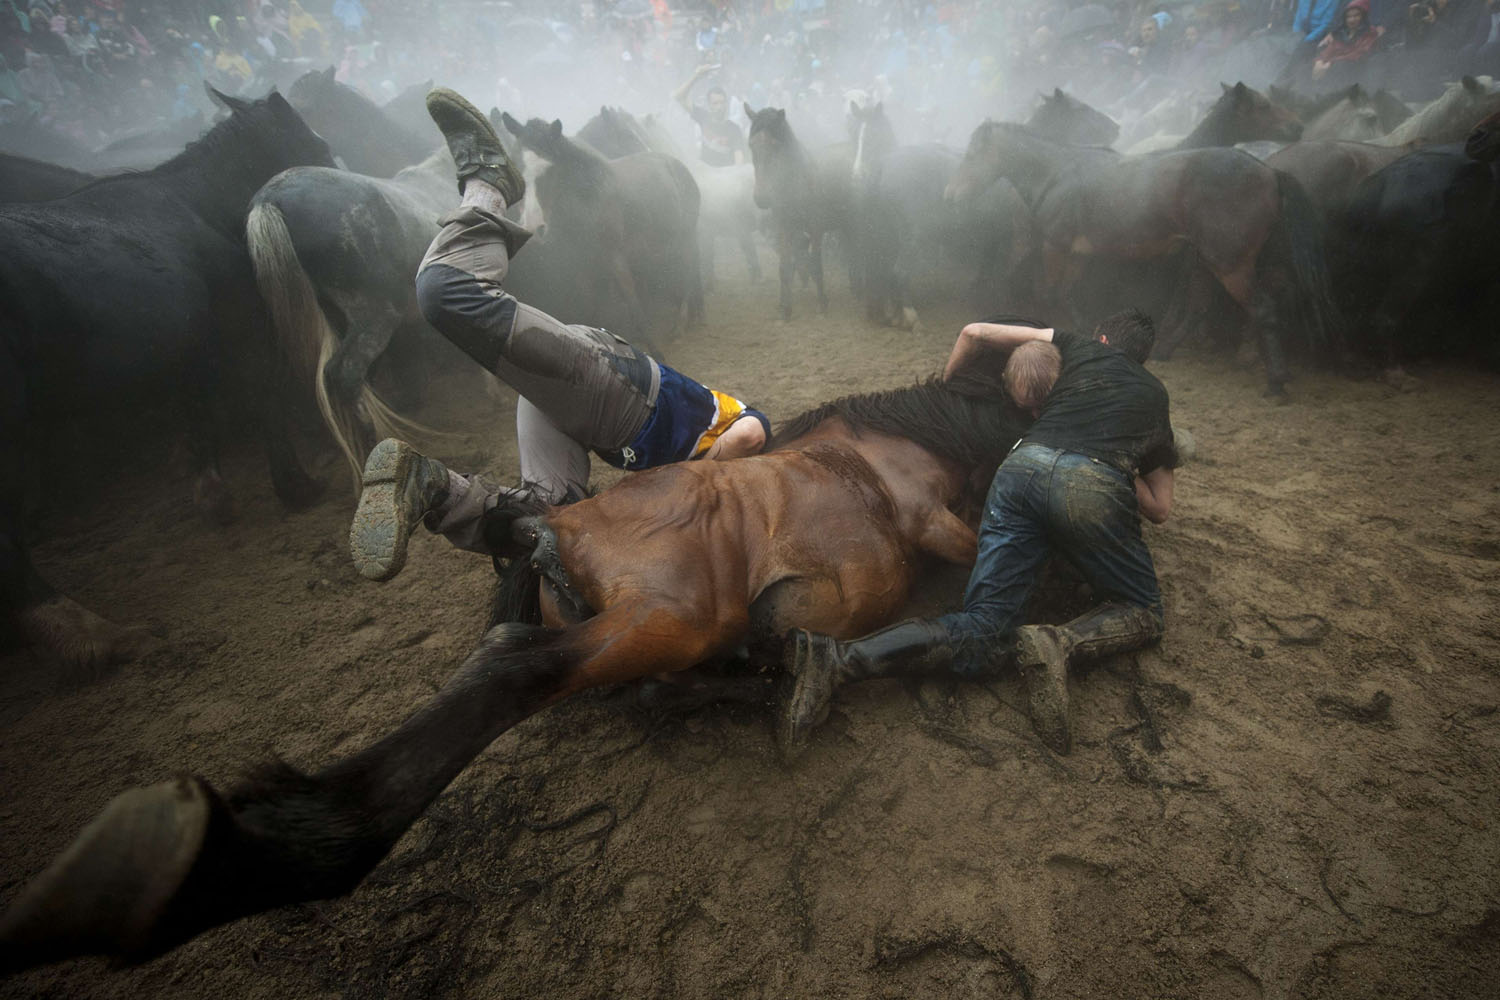 TOPSHOTS-SPAIN-FESTIVAL-HORSES-SHEARING-BEASTS